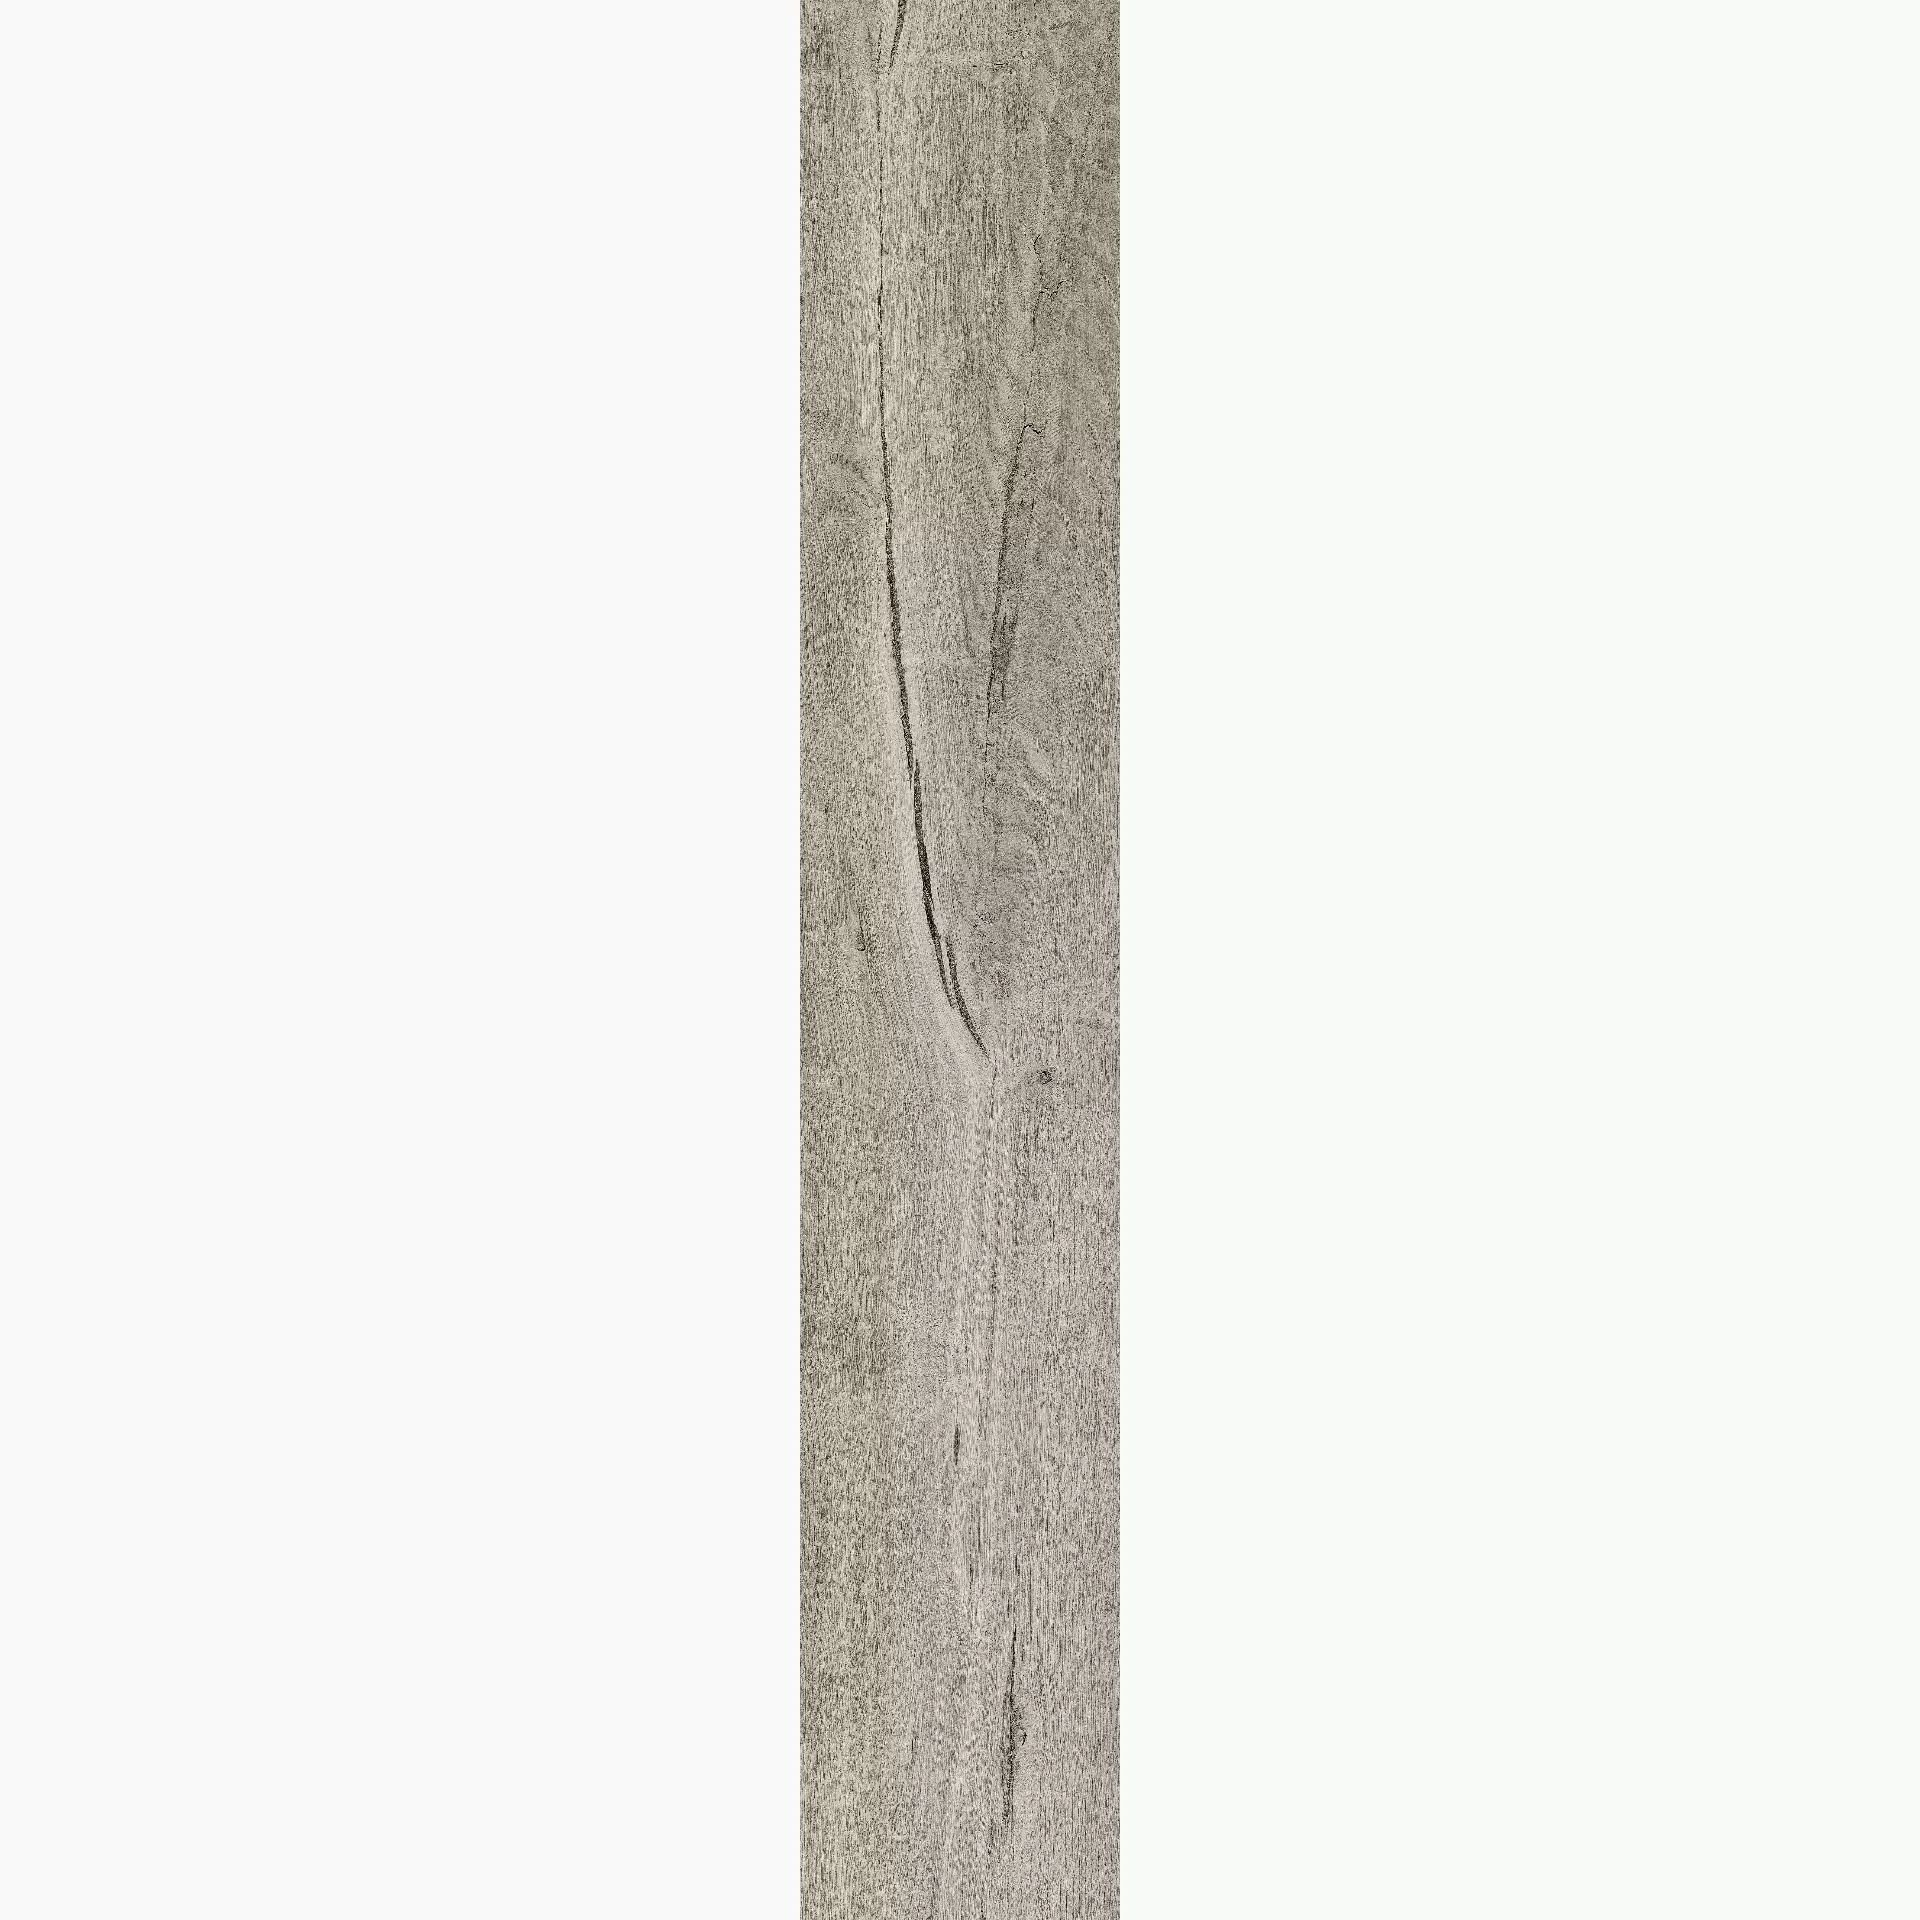 Flaviker Cozy Bark Naturale PF60000476 20x120cm rectified 8,5mm